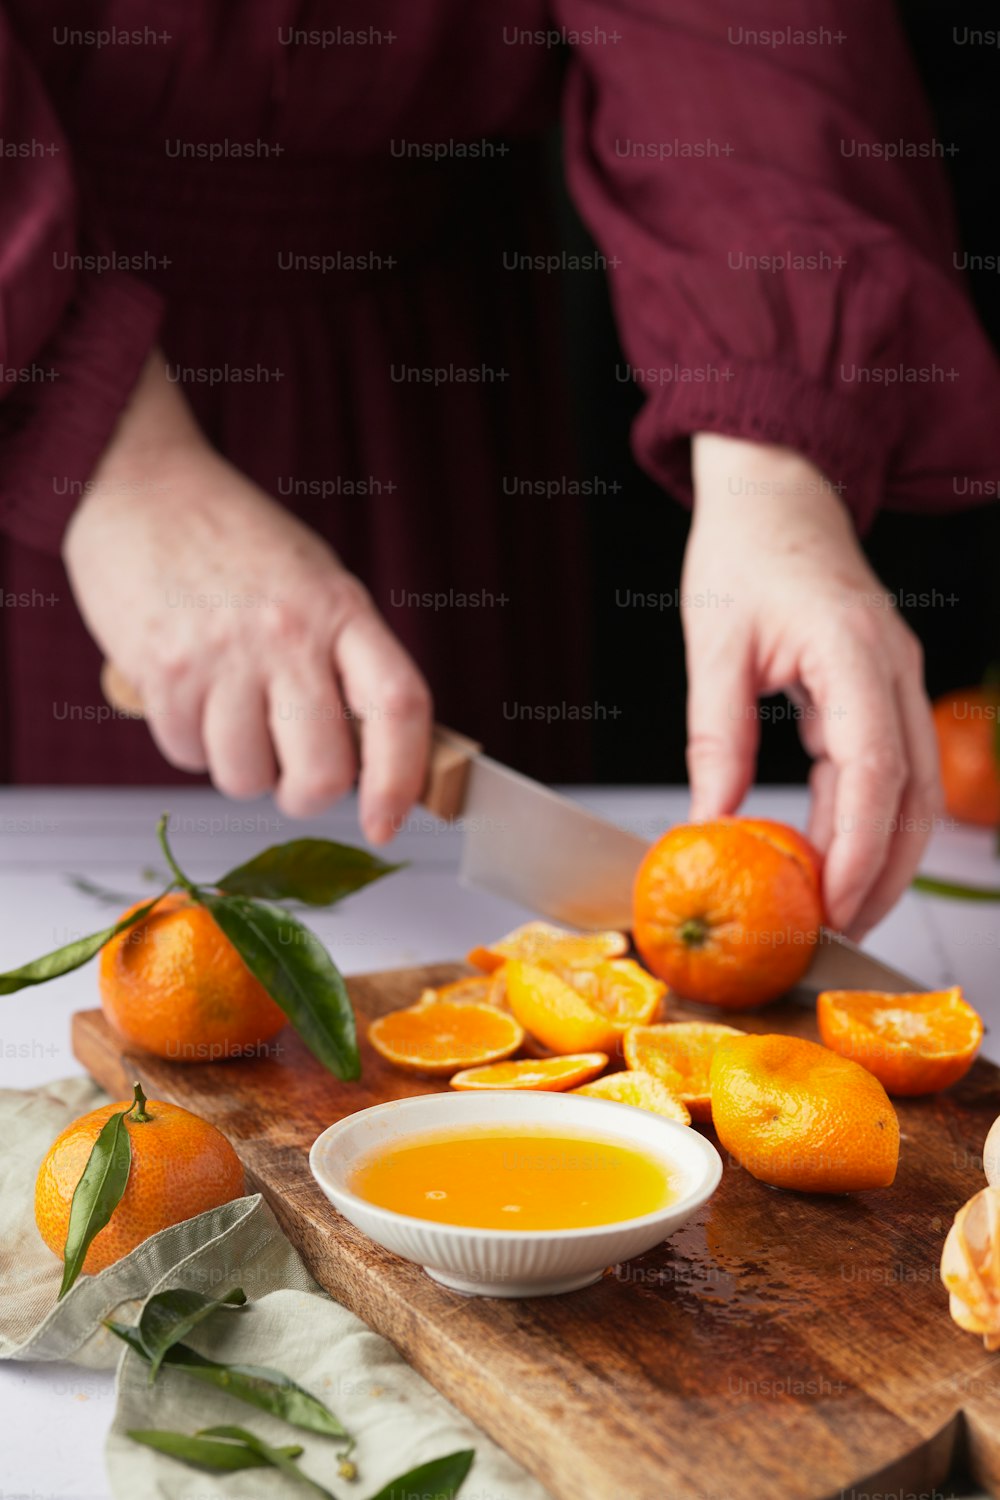 a person cutting oranges